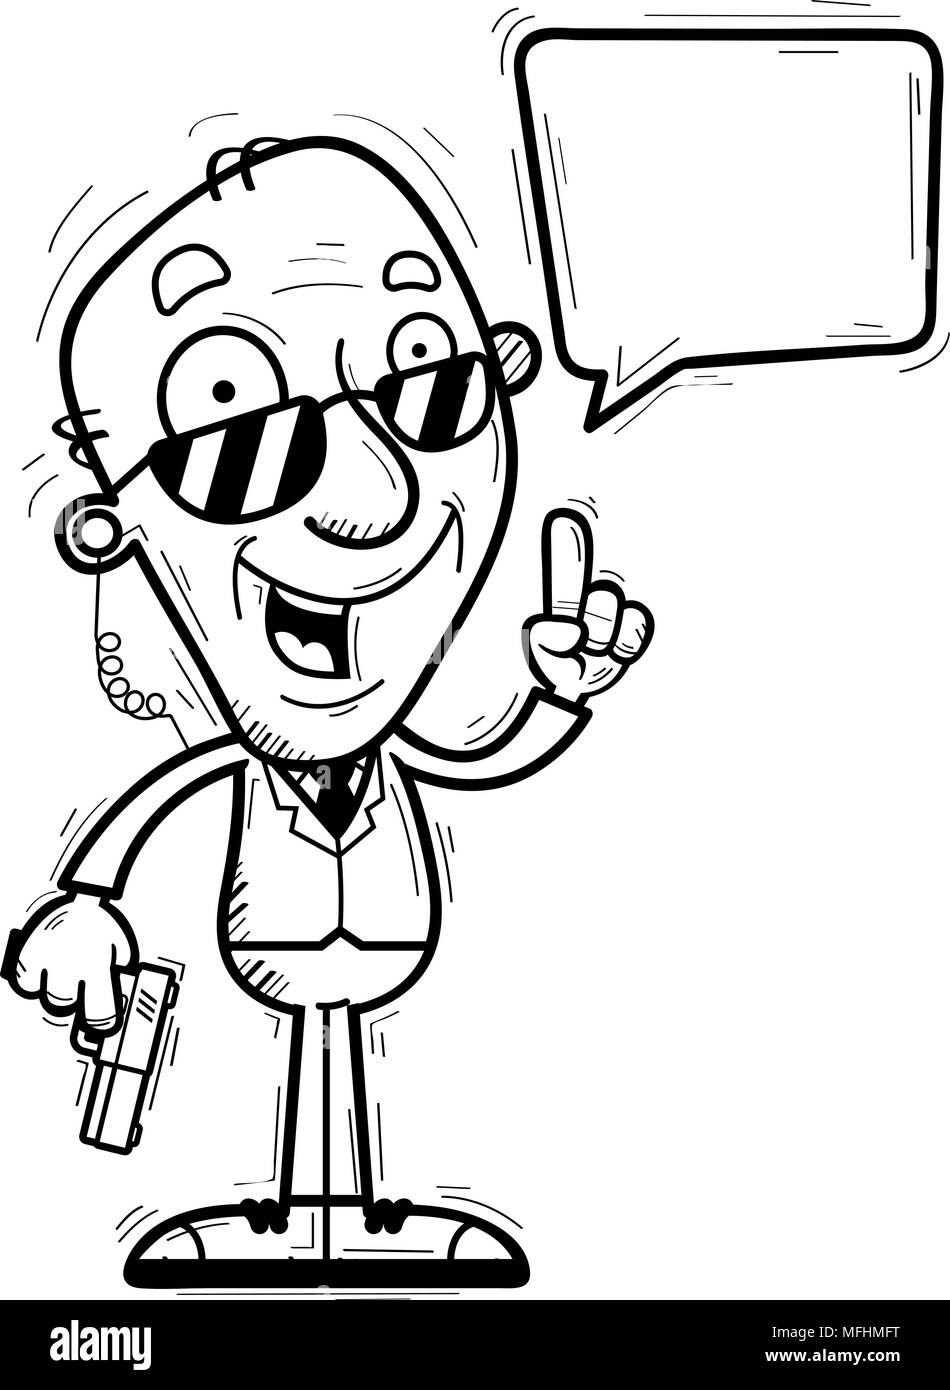 A cartoon illustration of a senior citizen man secret service agent talking. Stock Vector